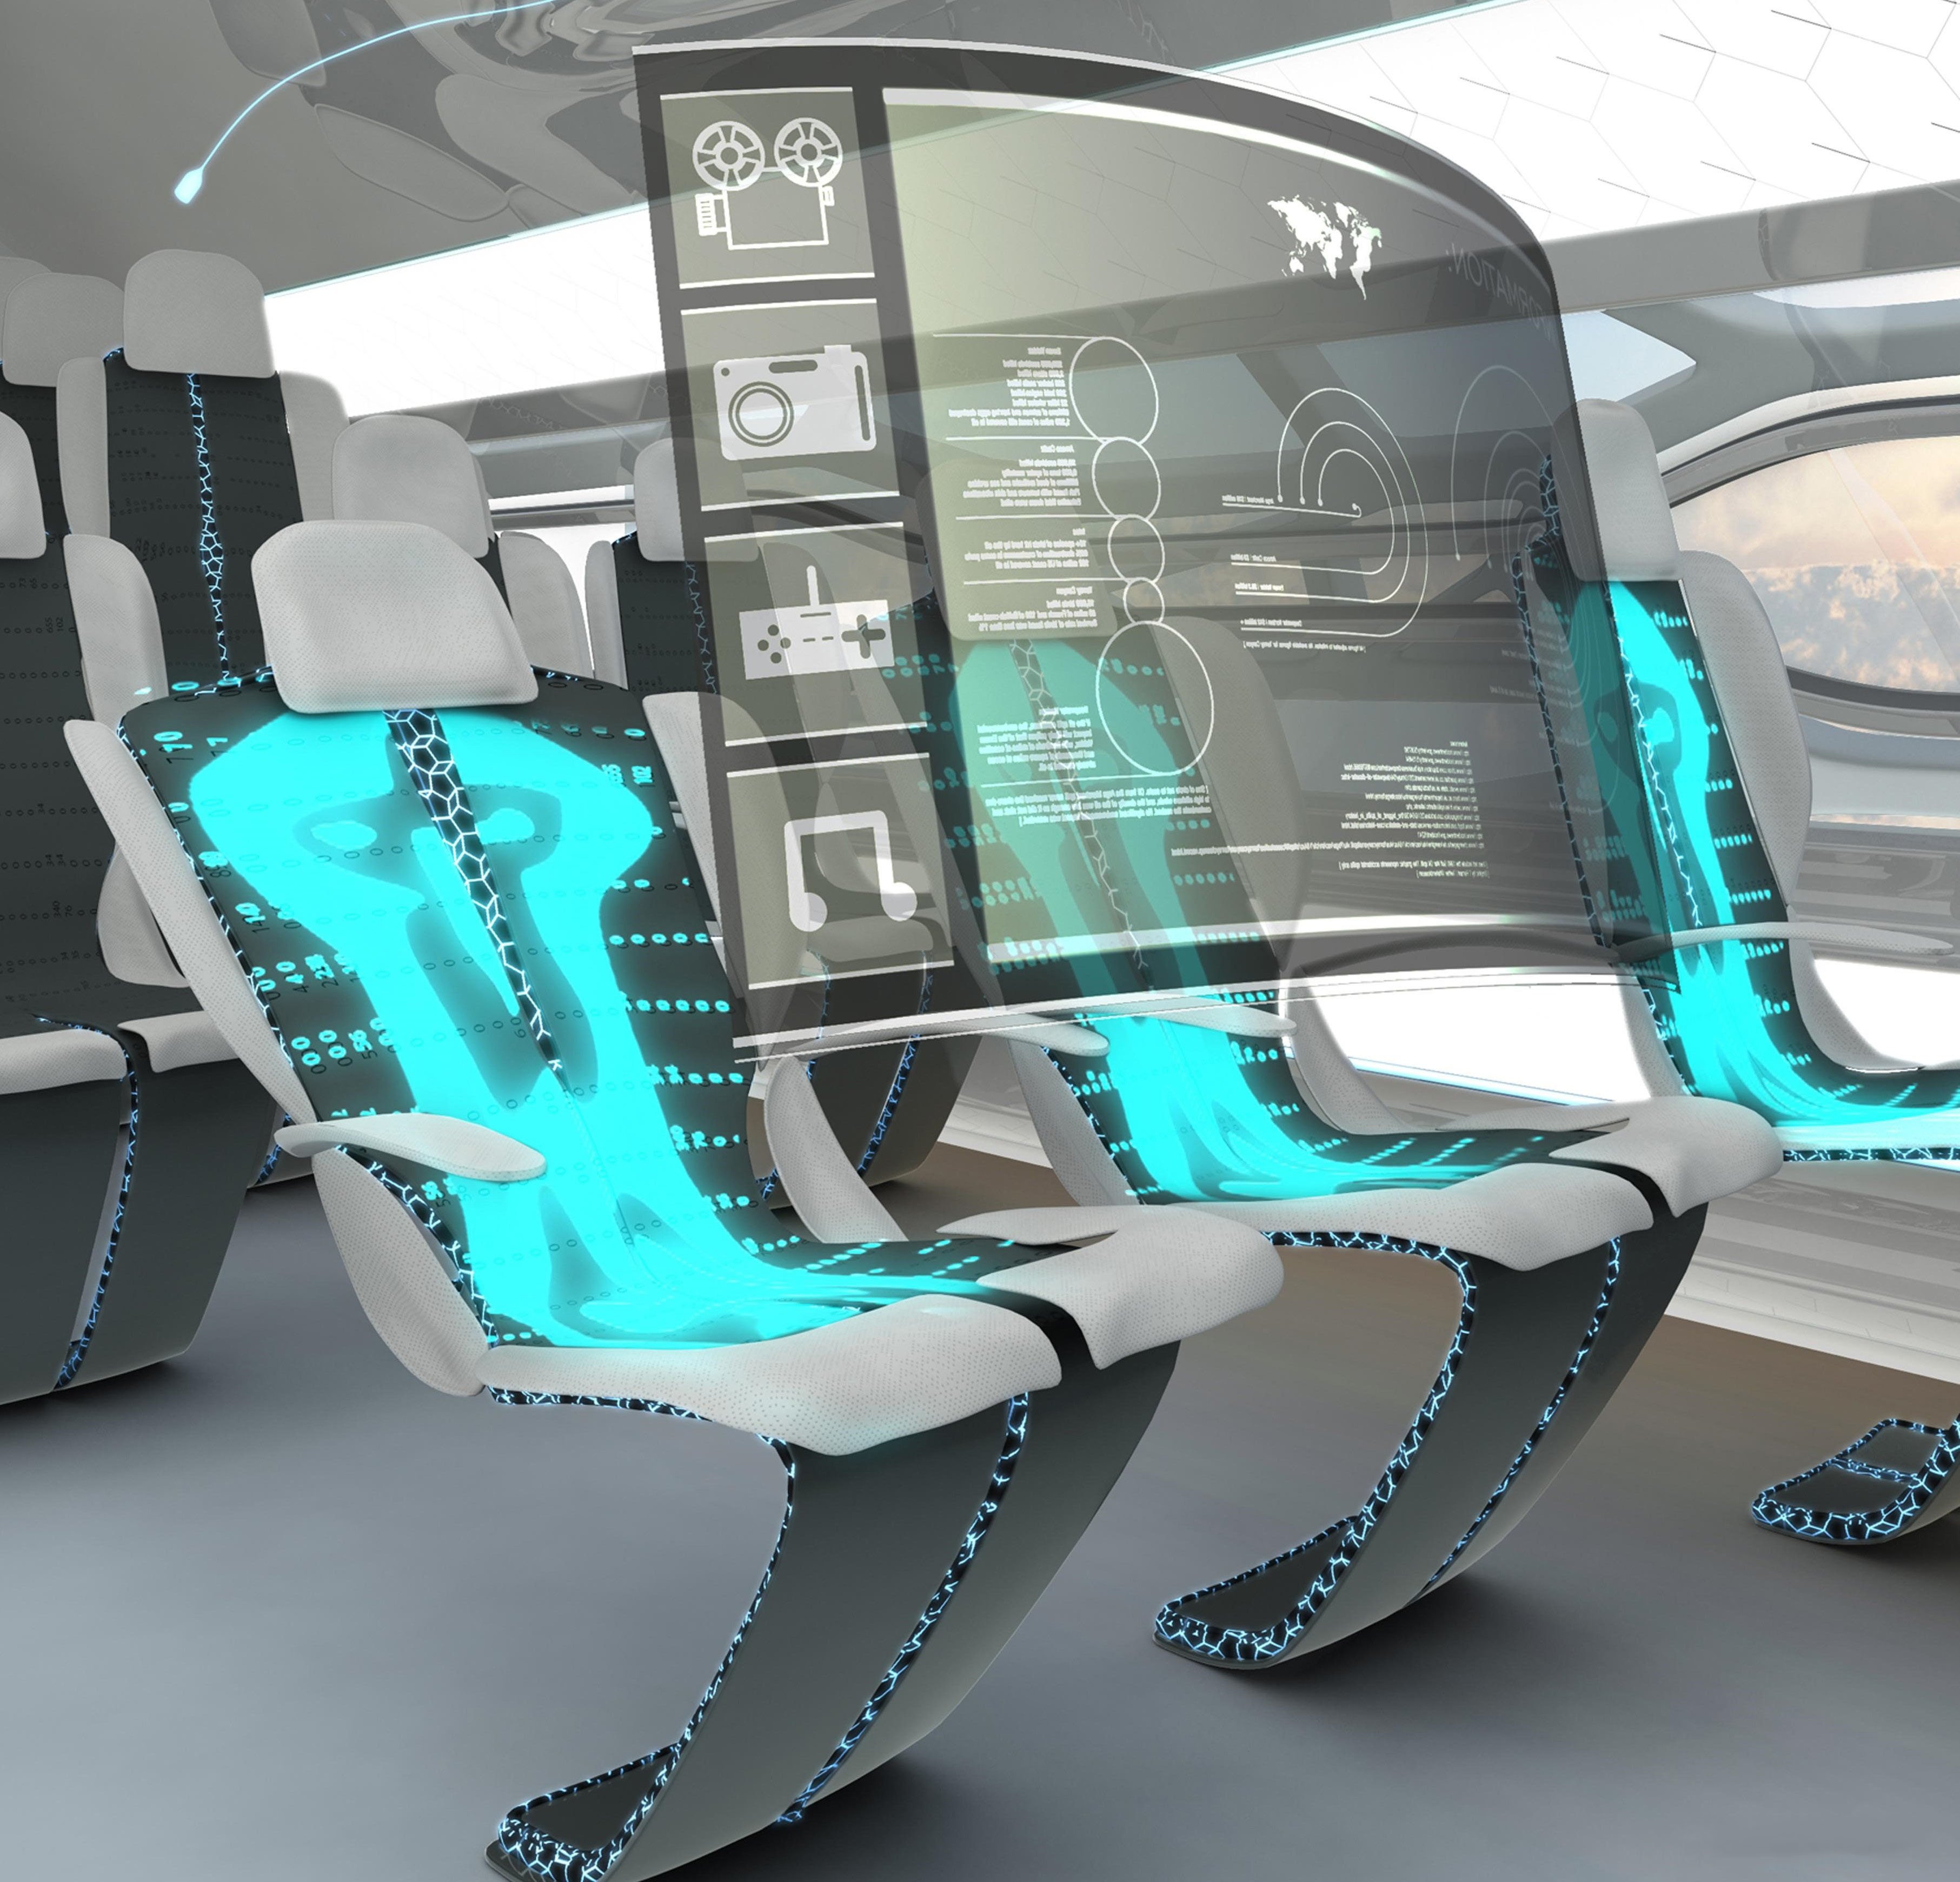 Самые крутые электронные. Airbus 2050. 2050 Года Airbus Concept. Футуристический интерьер. Компьютер будущего.